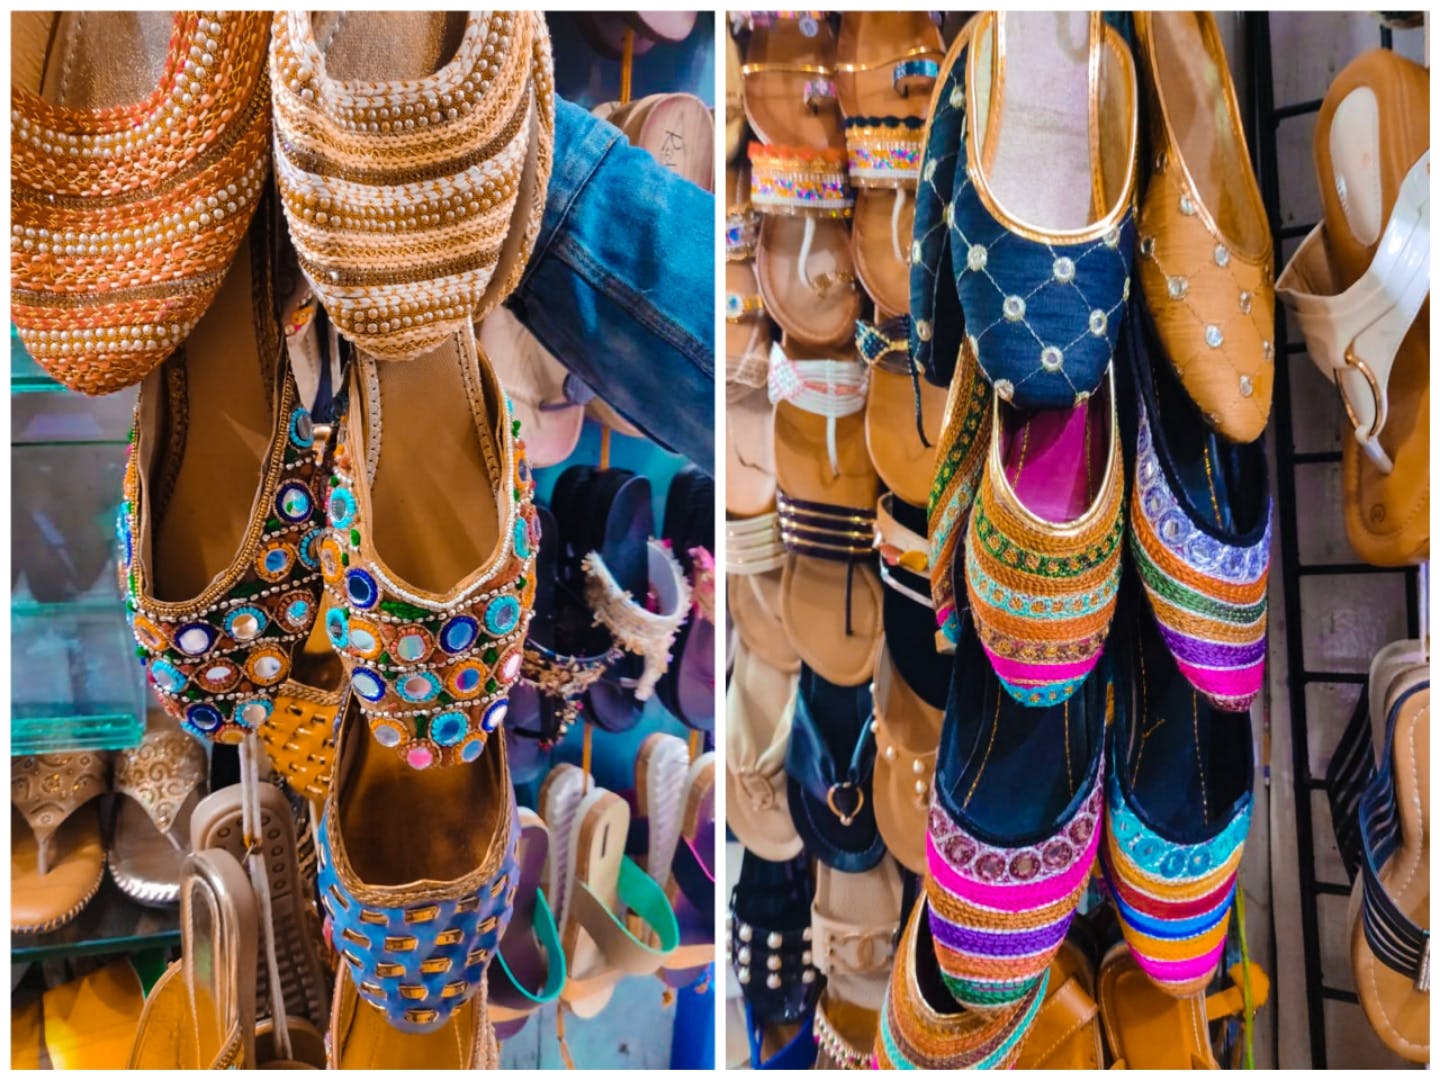 Footwear,Selling,Public space,Shoe,Bazaar,Market,Textile,Sandal,Street fashion,Fashion accessory